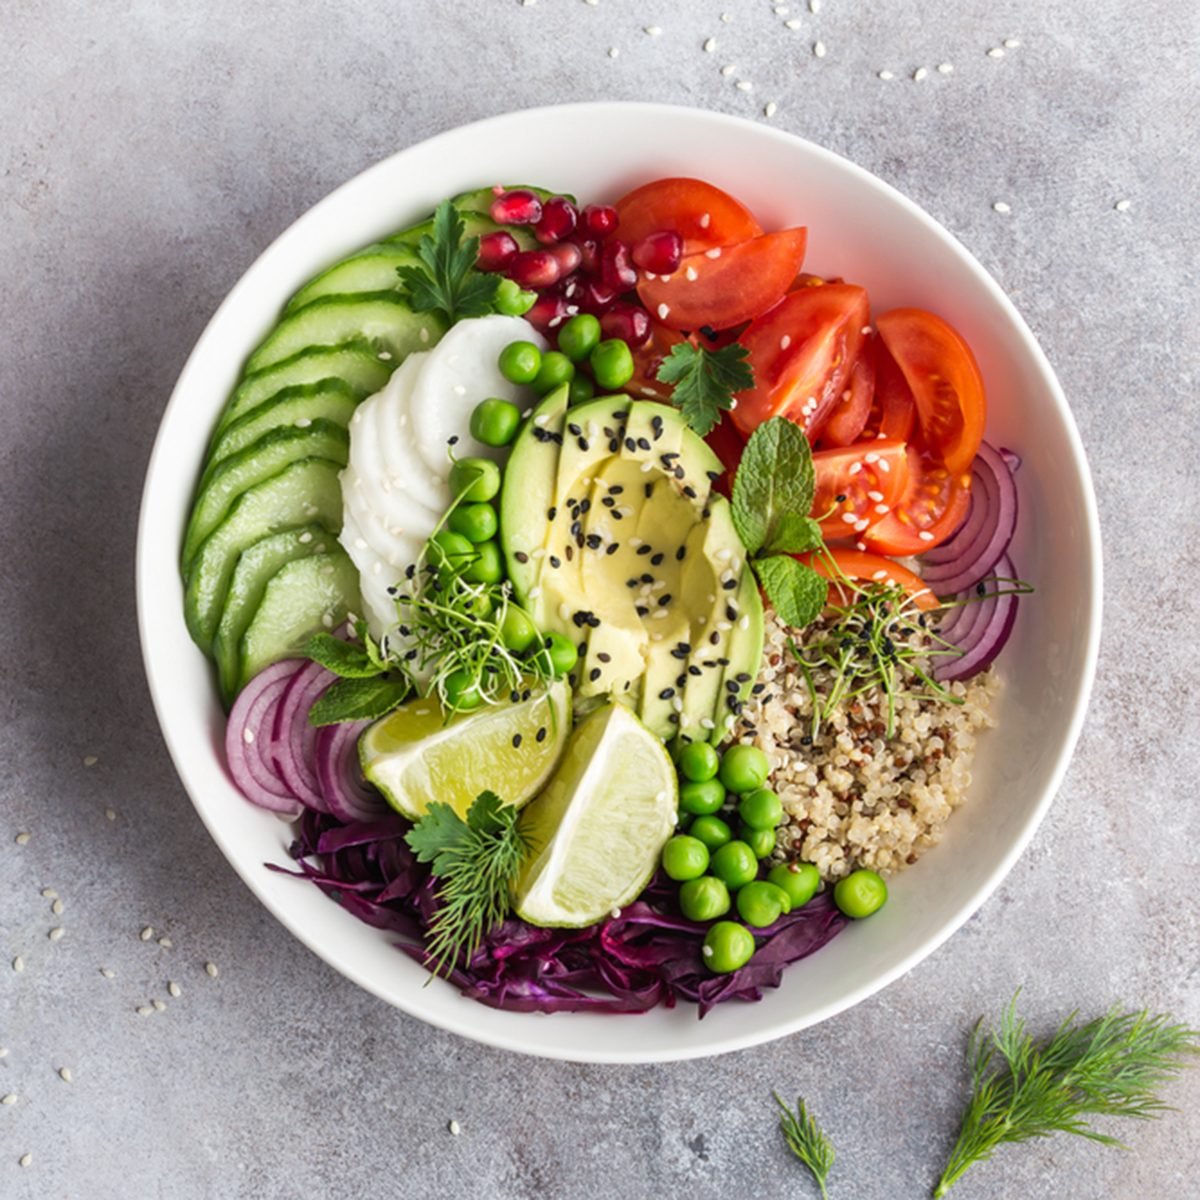 Most Popular 5 Salad Spinner For Restaurant-Quality Salads